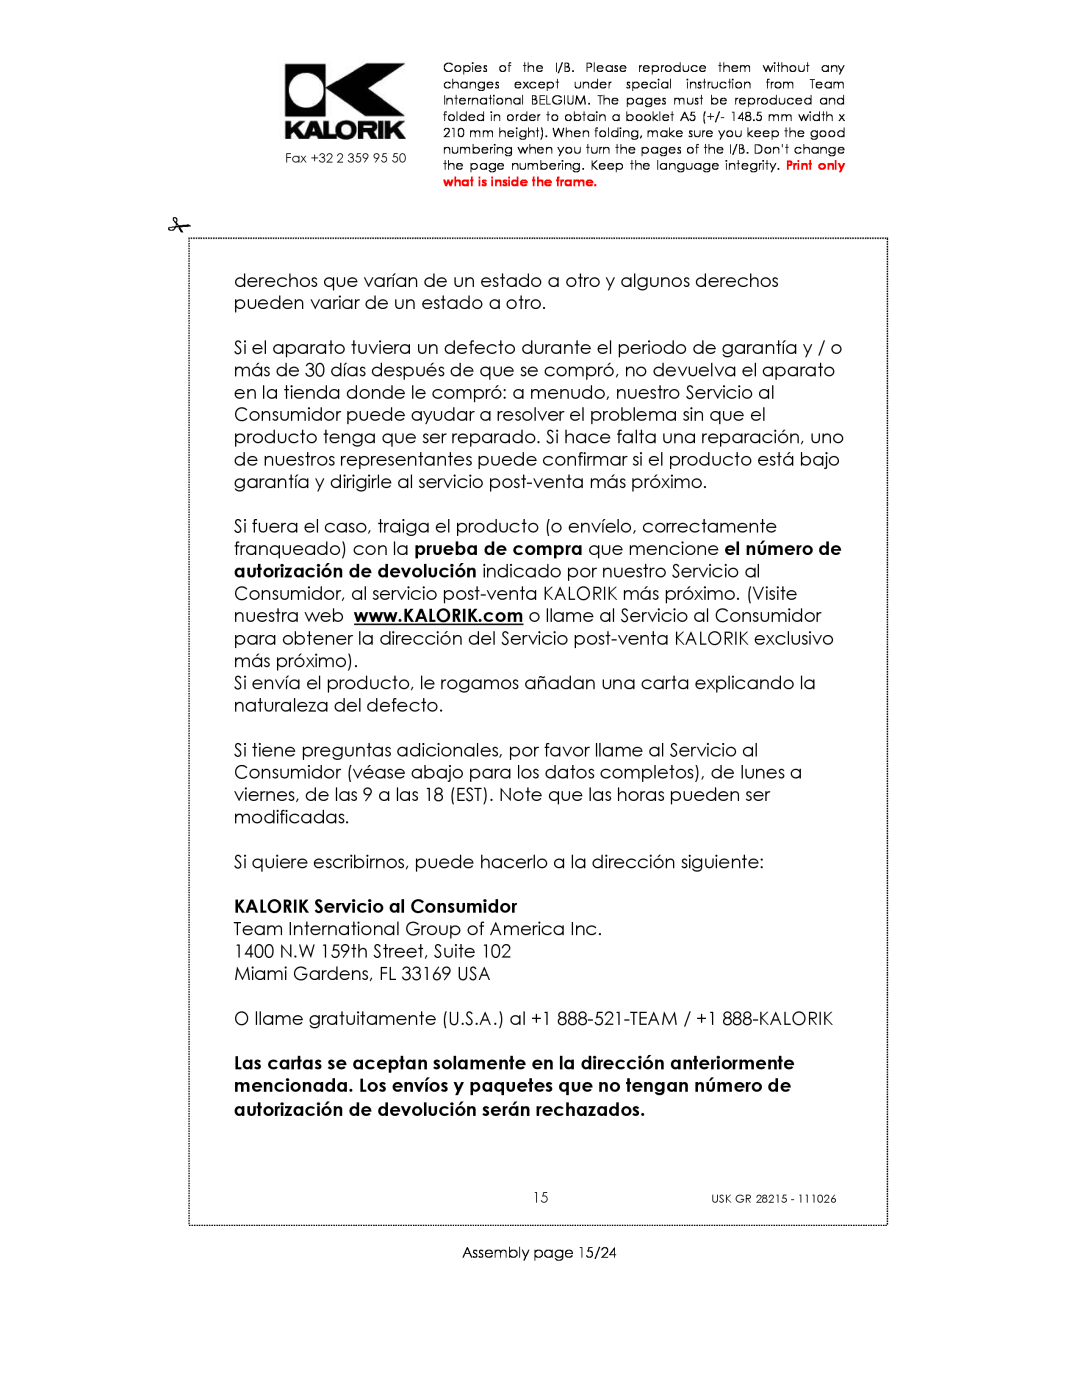 Kalorik USK GR 28215 manual KALORIK Servicio al Consumidor, Assembly page 15/24 